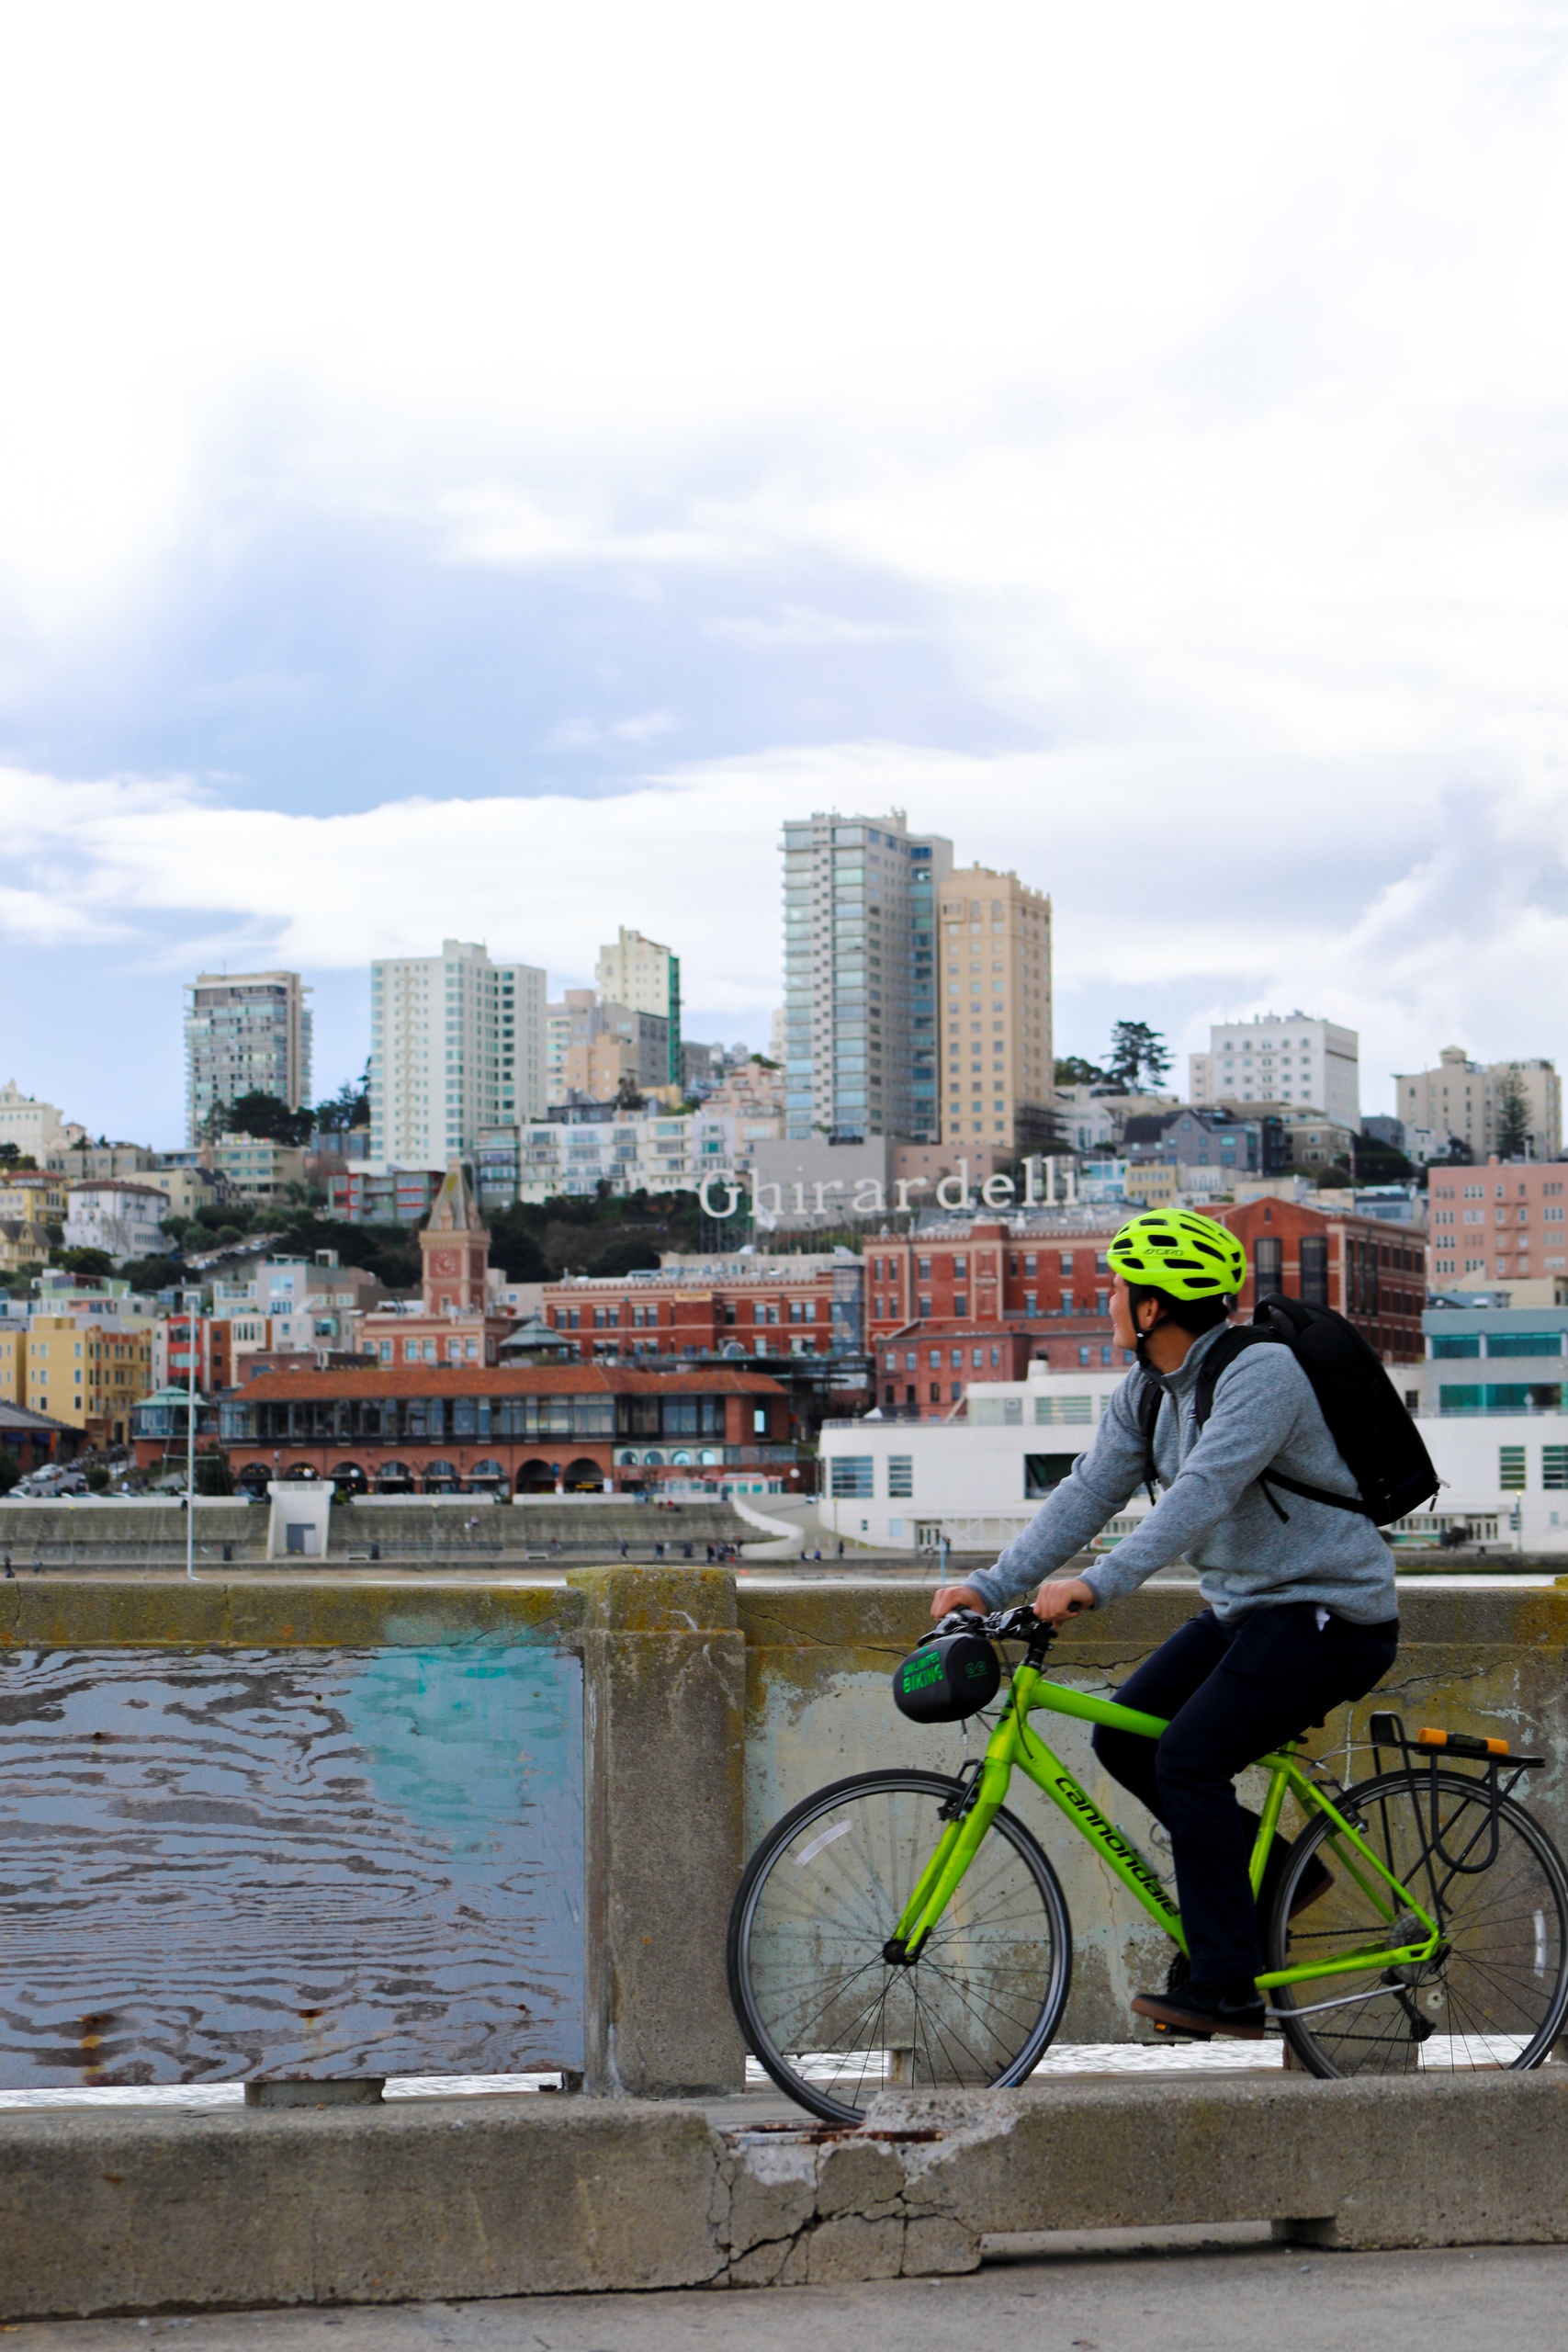 Golden Gate Bridge Bike Rentals + Sausalito Ferry Return - Accommodations in San Francisco